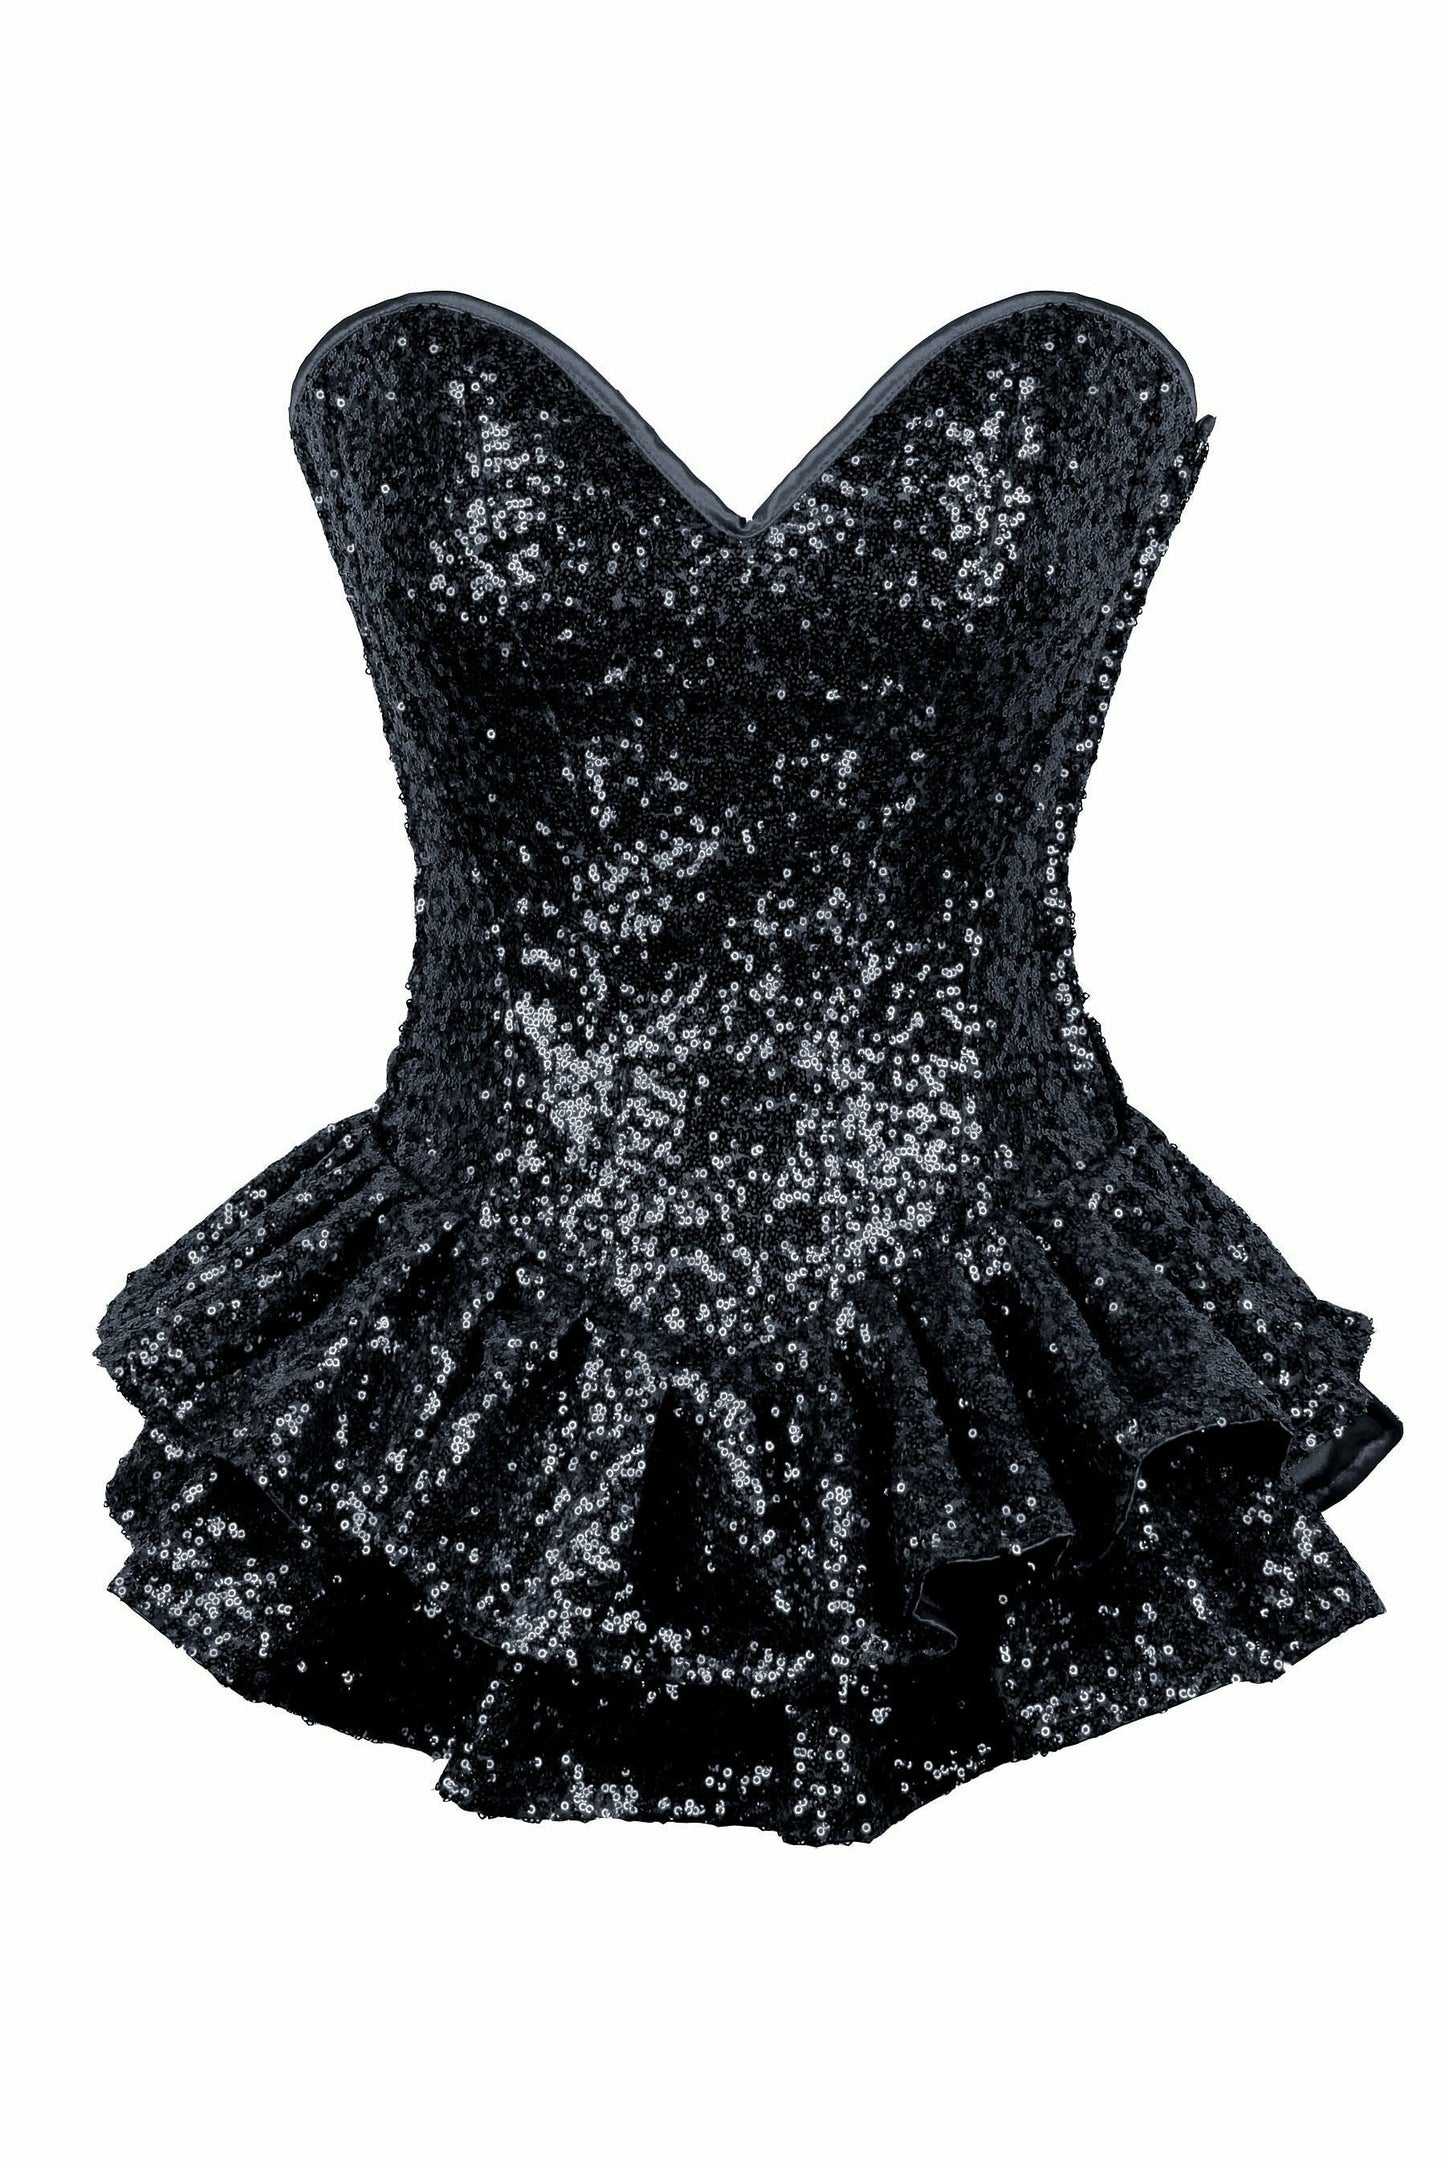 Top Drawer Black Sequin Steel Boned Mini Corset Dress - Lust Charm 